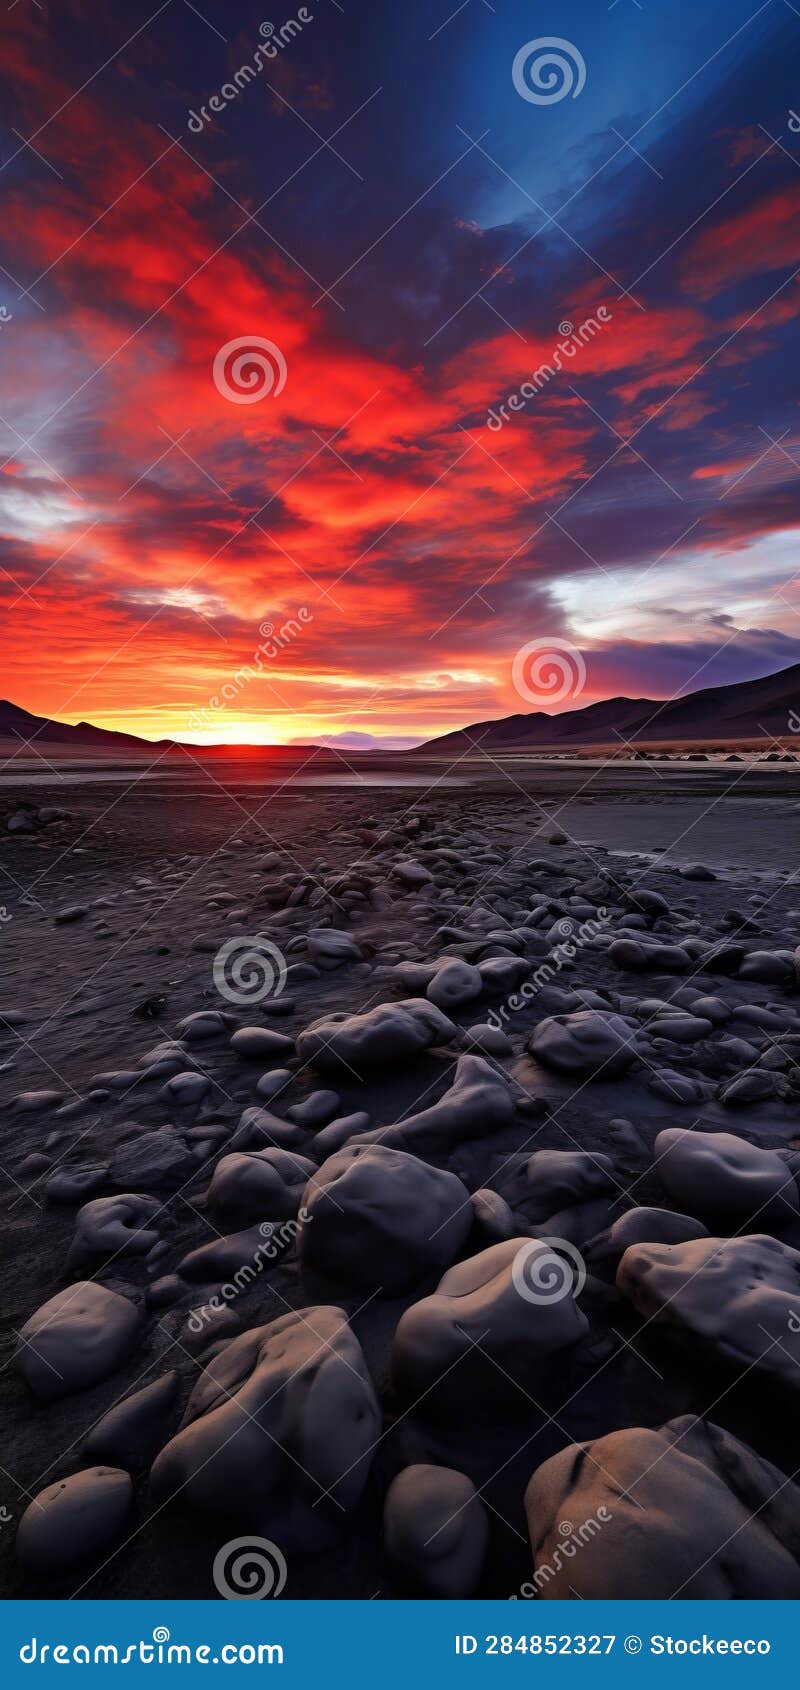 mesmerizing orange sunset over rocks and beach